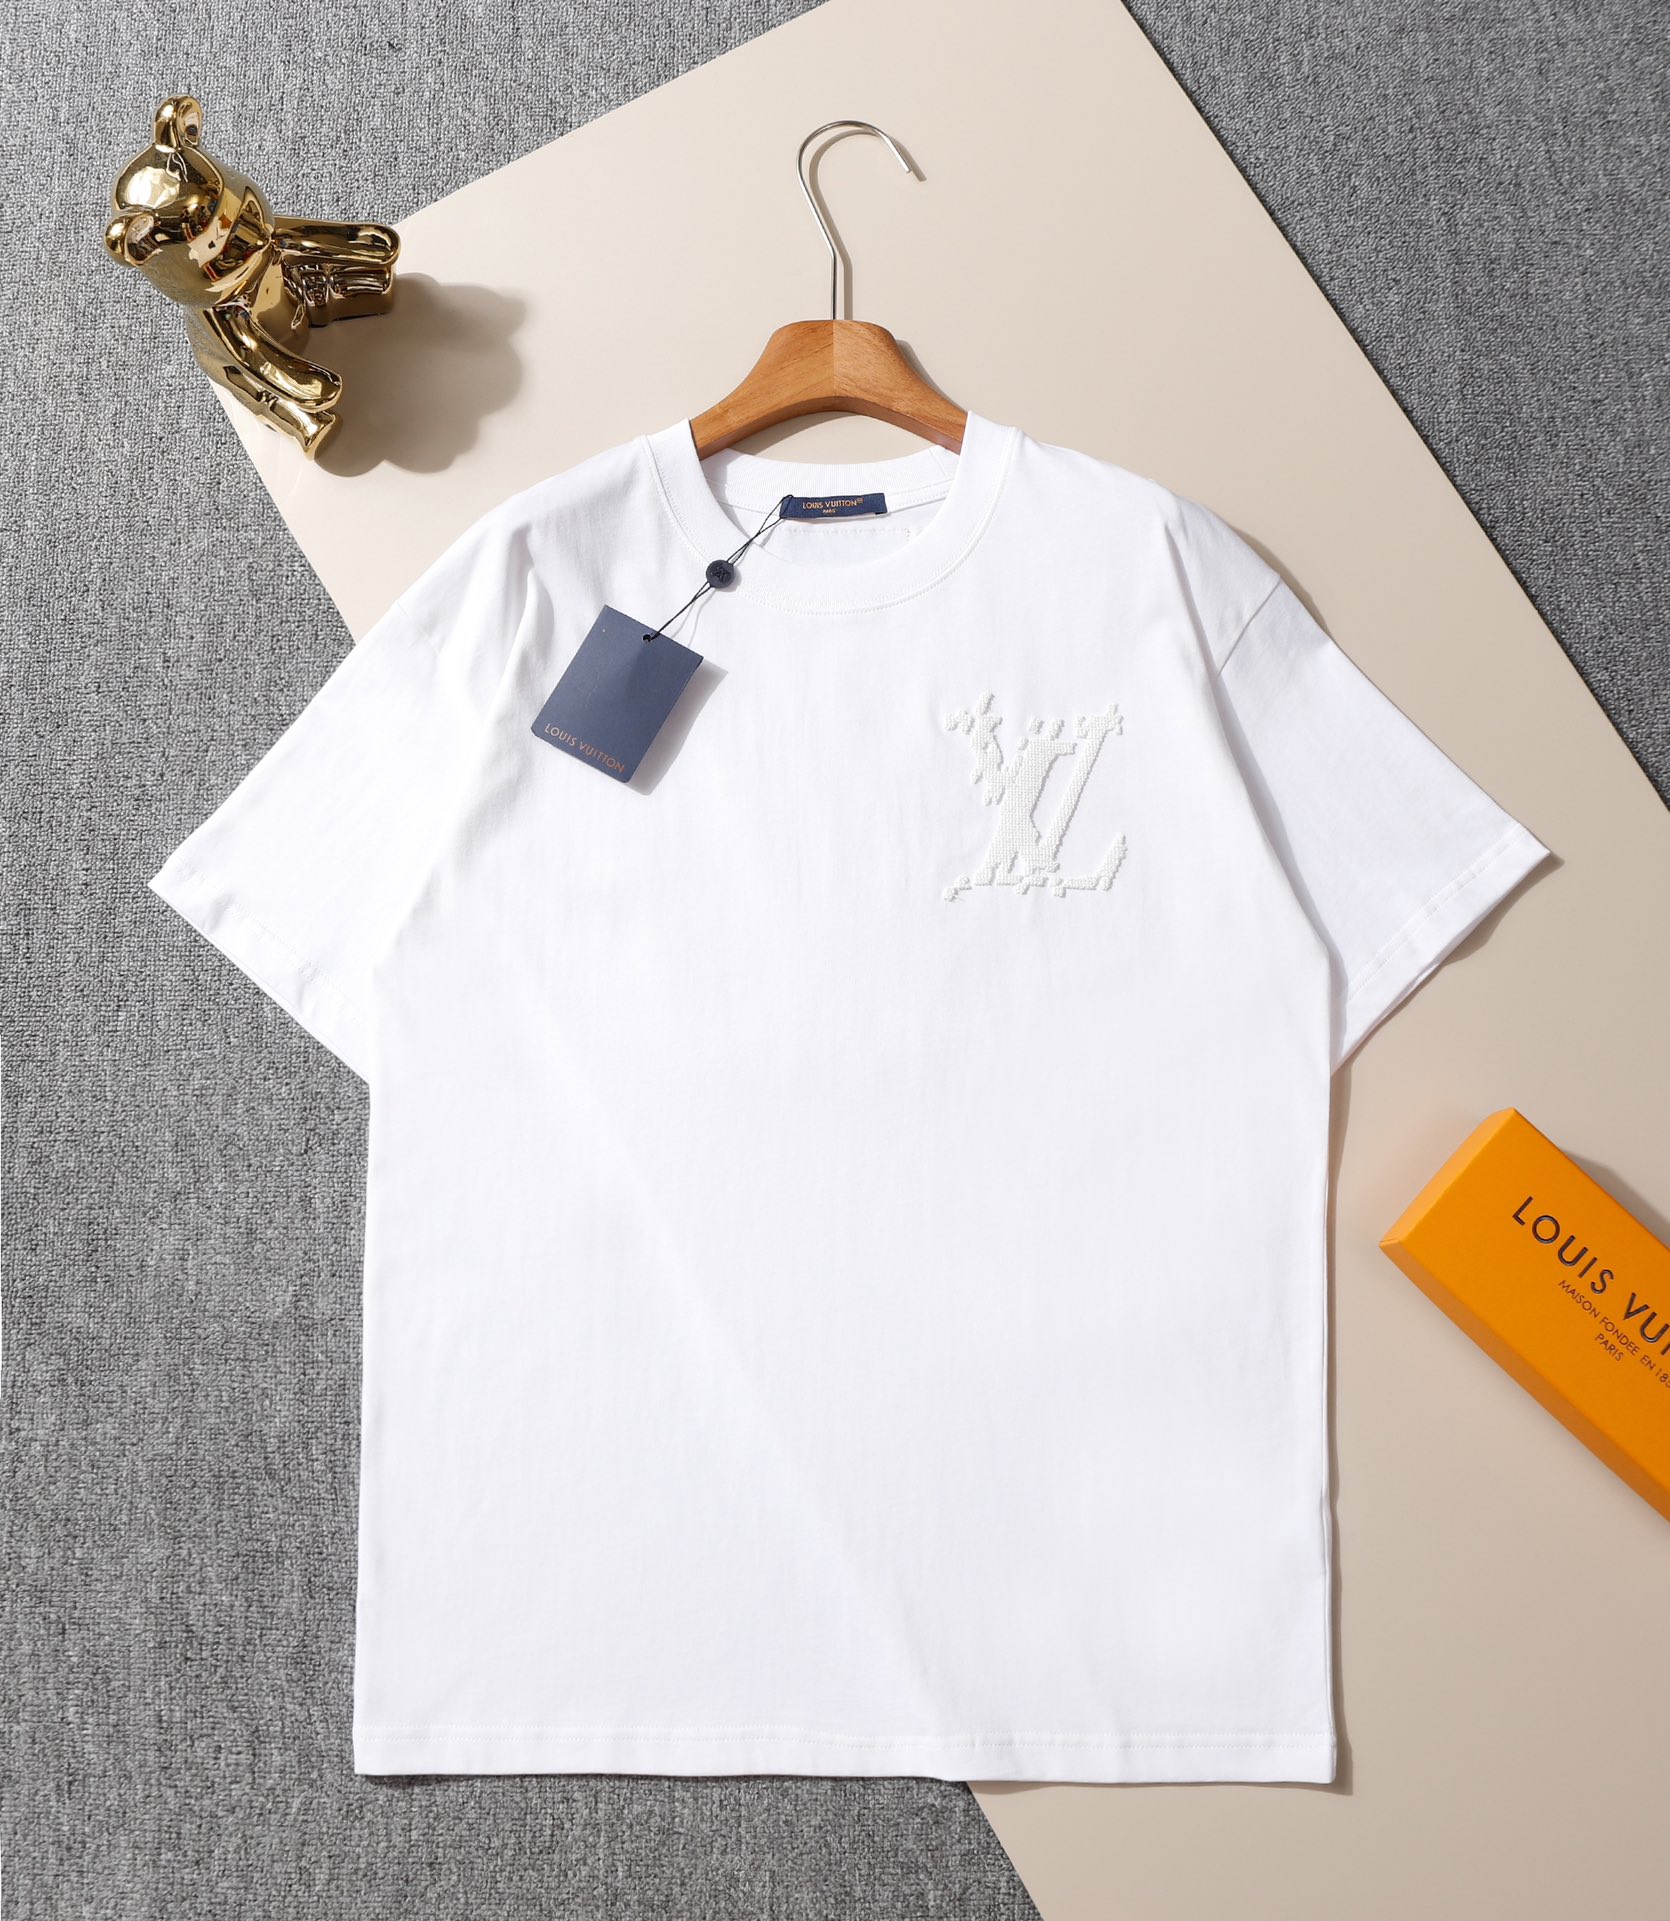 Top Designer replica
 Louis Vuitton Clothing T-Shirt Embroidery Cotton Short Sleeve